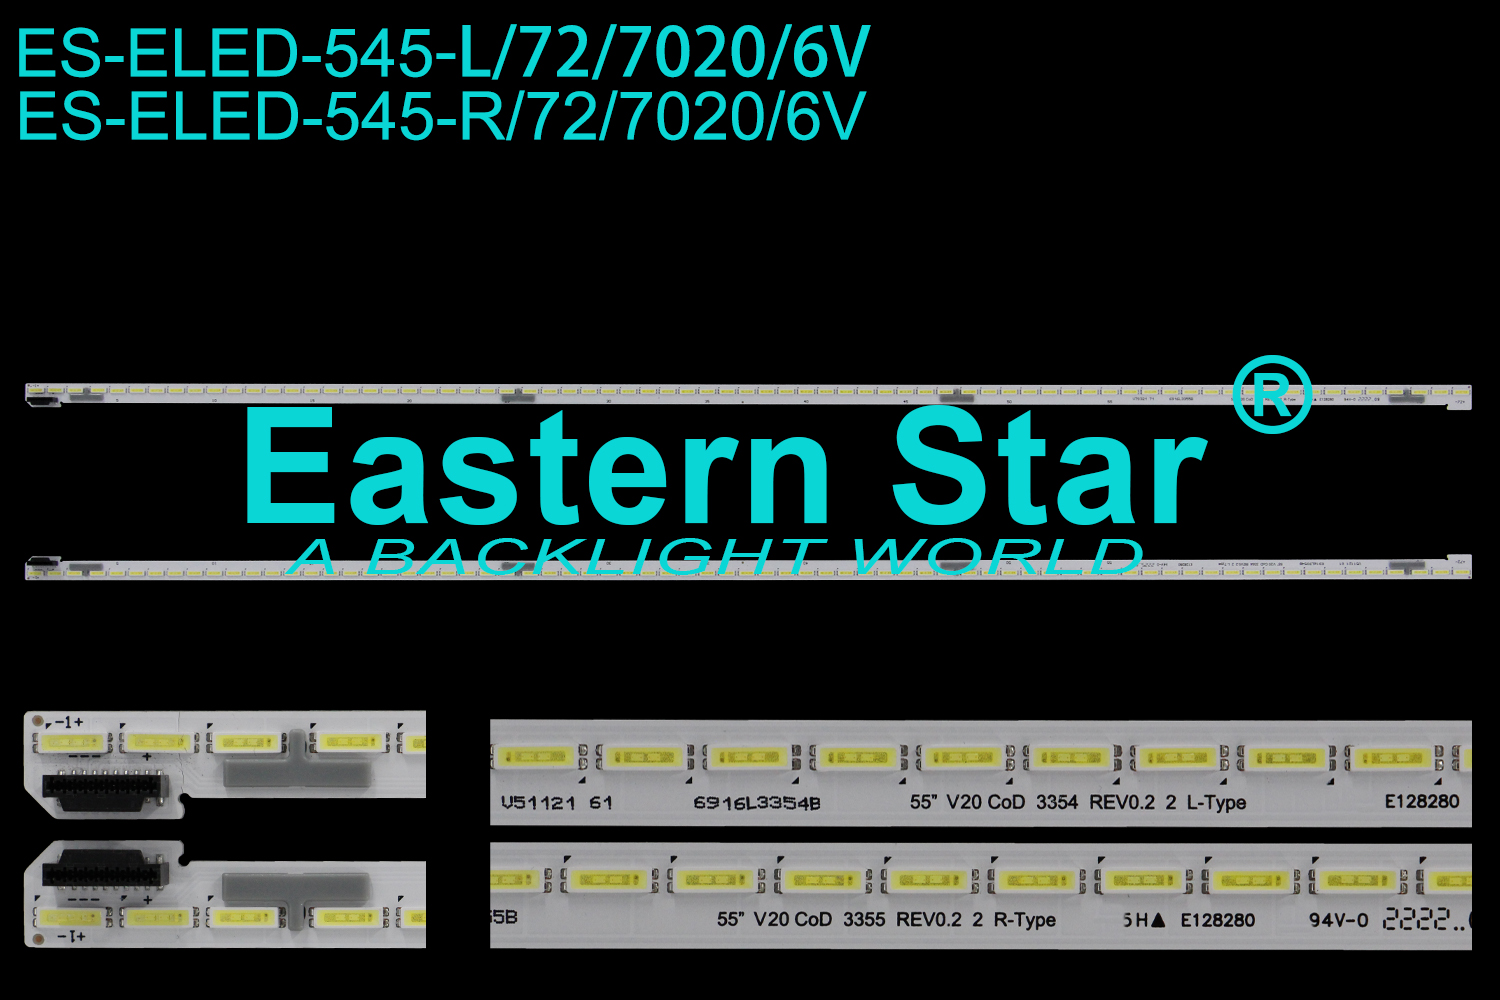 ES-ELED-545 ELED/EDGE TV backlight use for 55'' LG 6919L3554B 55 V20 CoD 3354 REV0.2 2 L-Type 6919L3555B 55 V20 CoD 3355 REV0.2 2 R-Type  LED STRIPS(2)